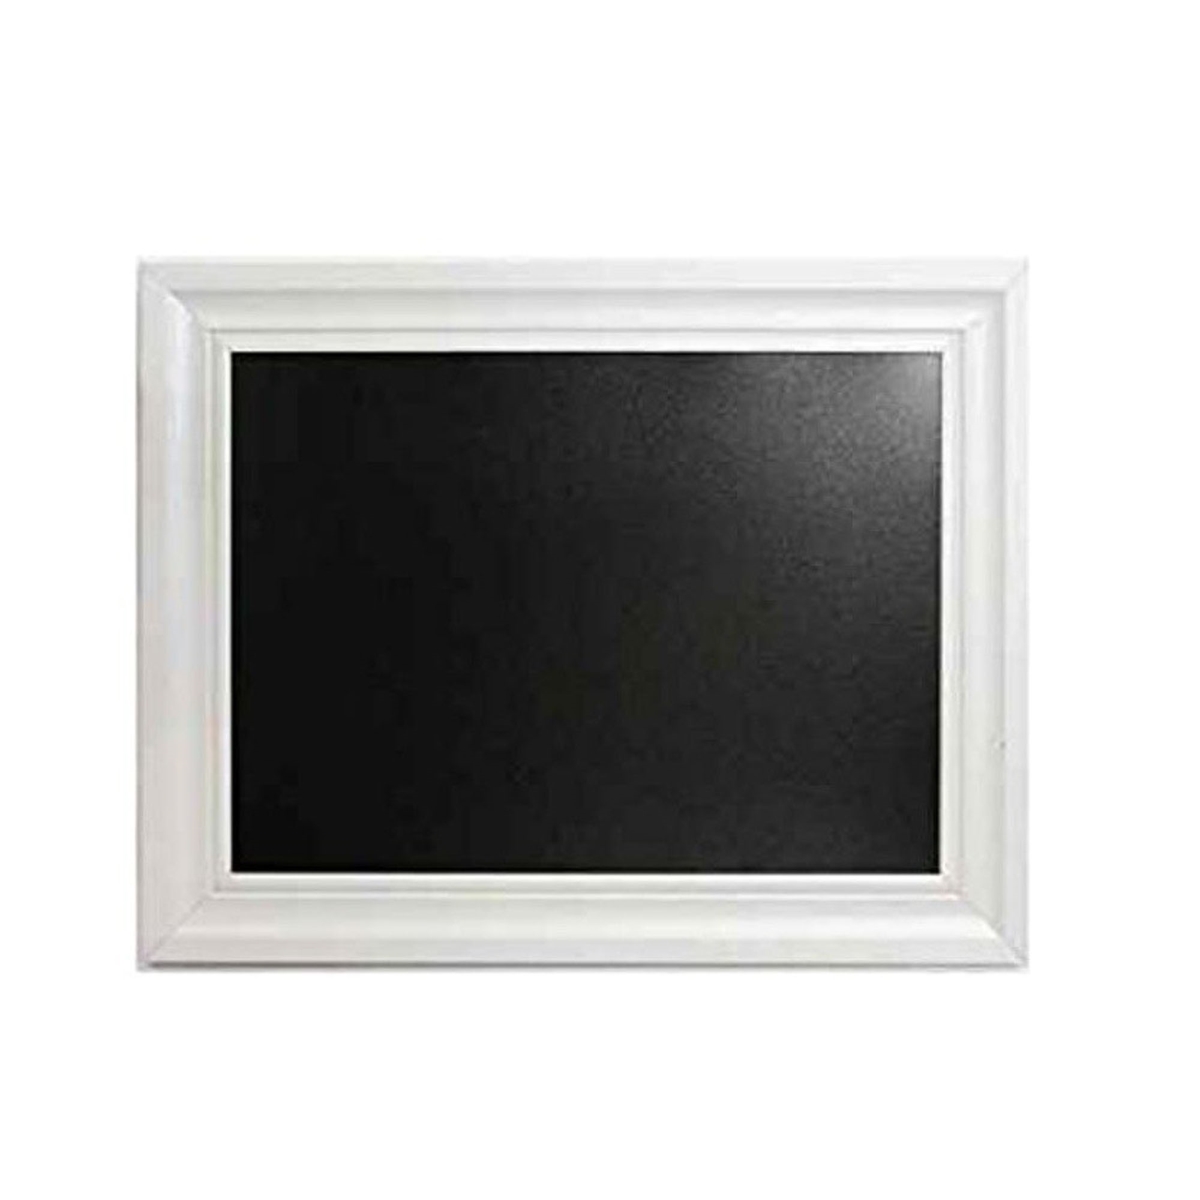 352157 Rectangular Wooden Chalkboard With Beveled Frame, Black & White